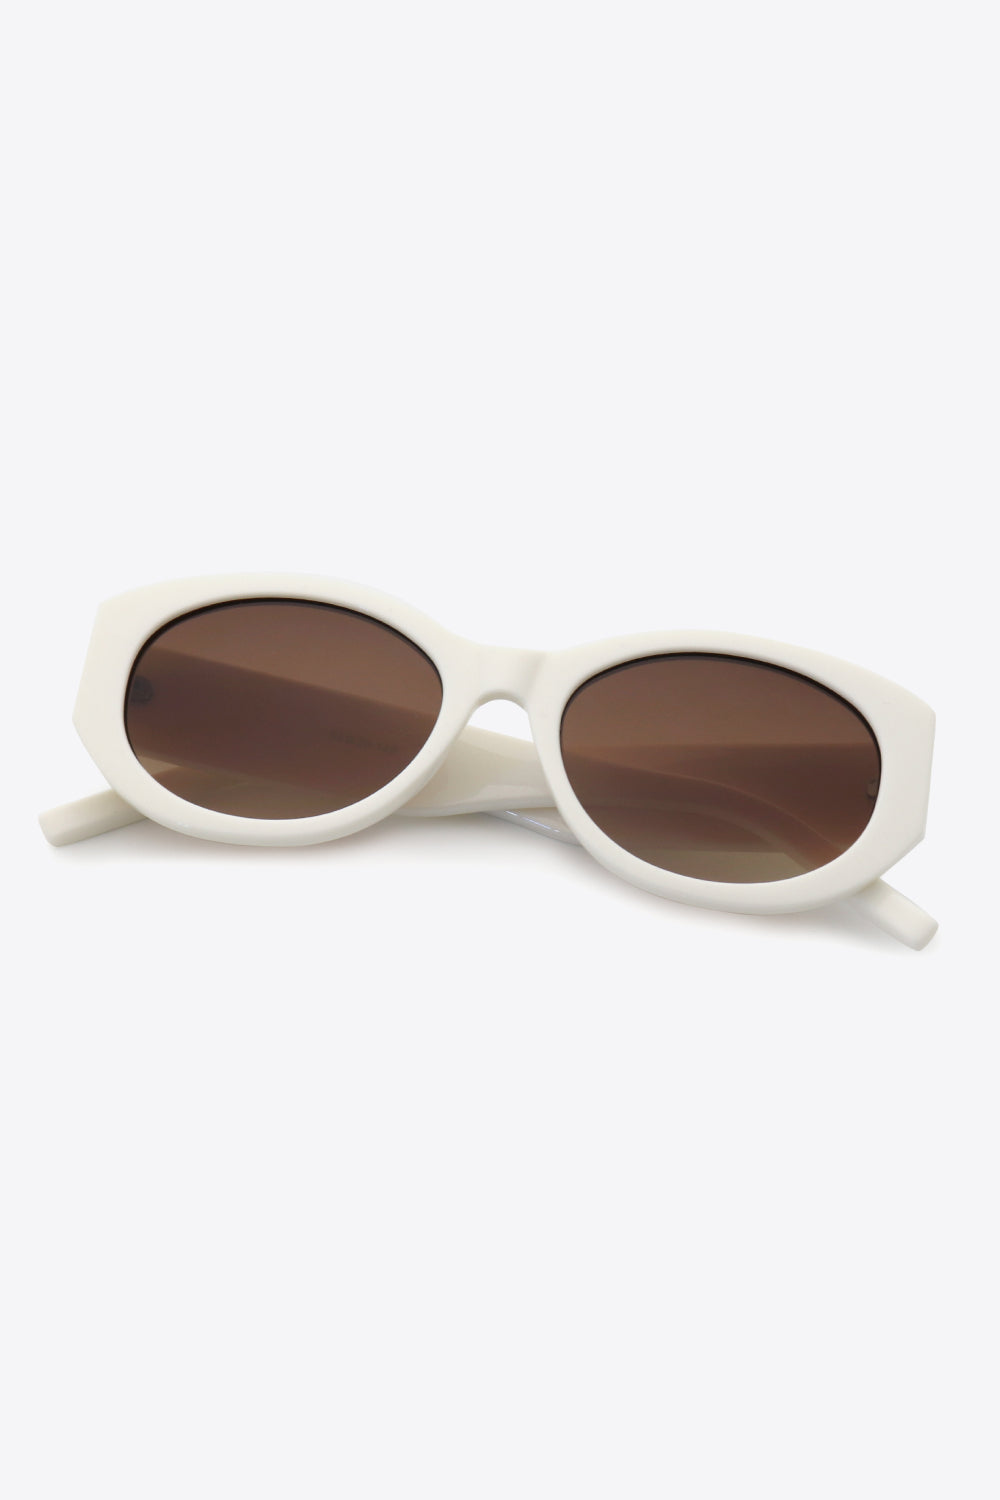 The802Gypsy sunglasses Beige / One Size GYPSY-UV400 Polycarbonate Sunglasses